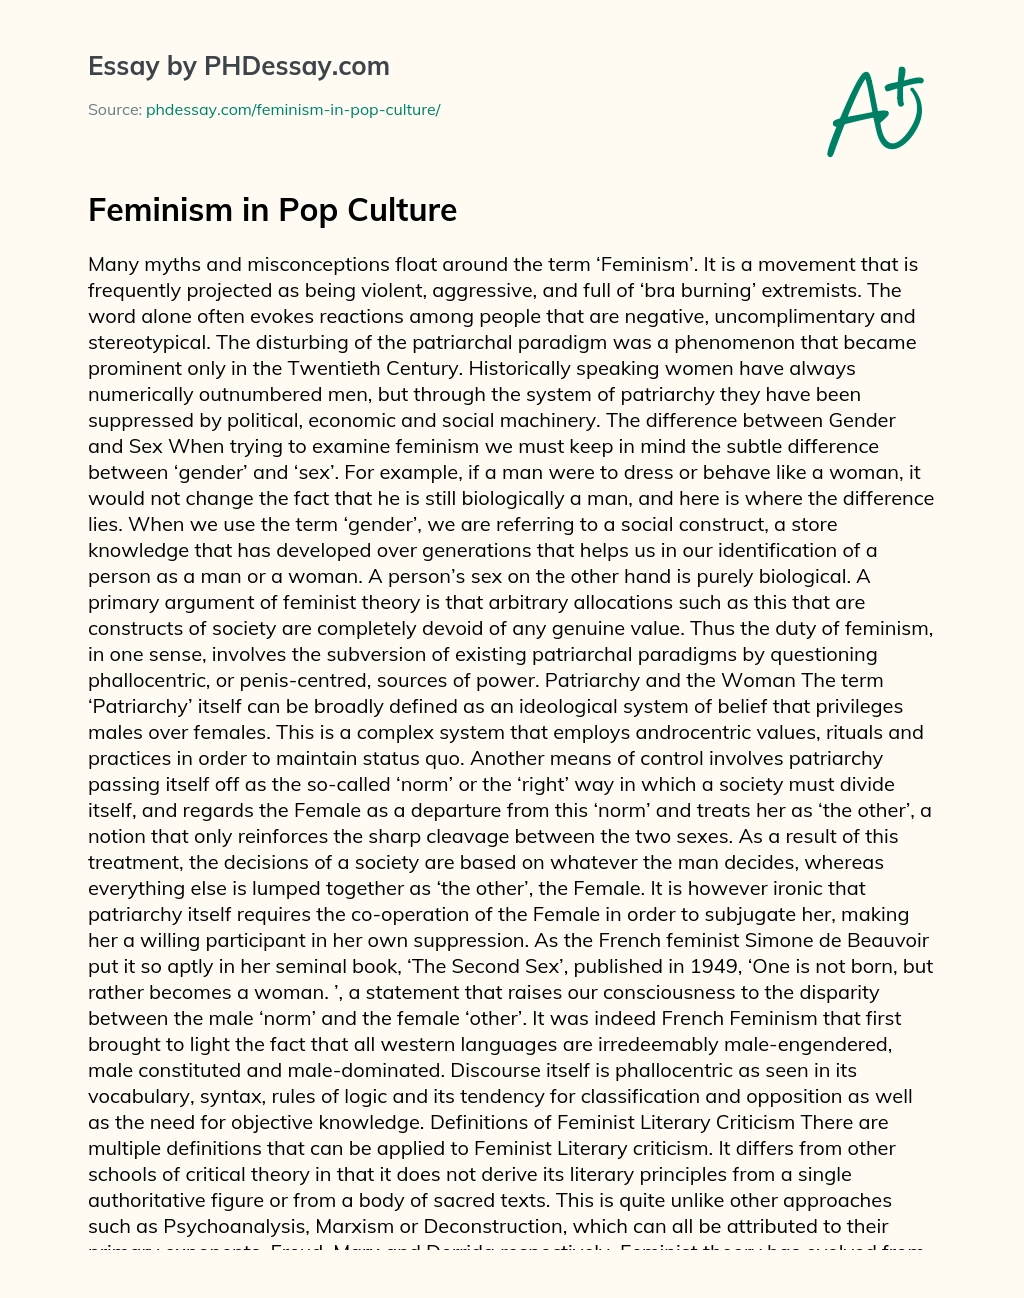 Feminism in Pop Culture essay